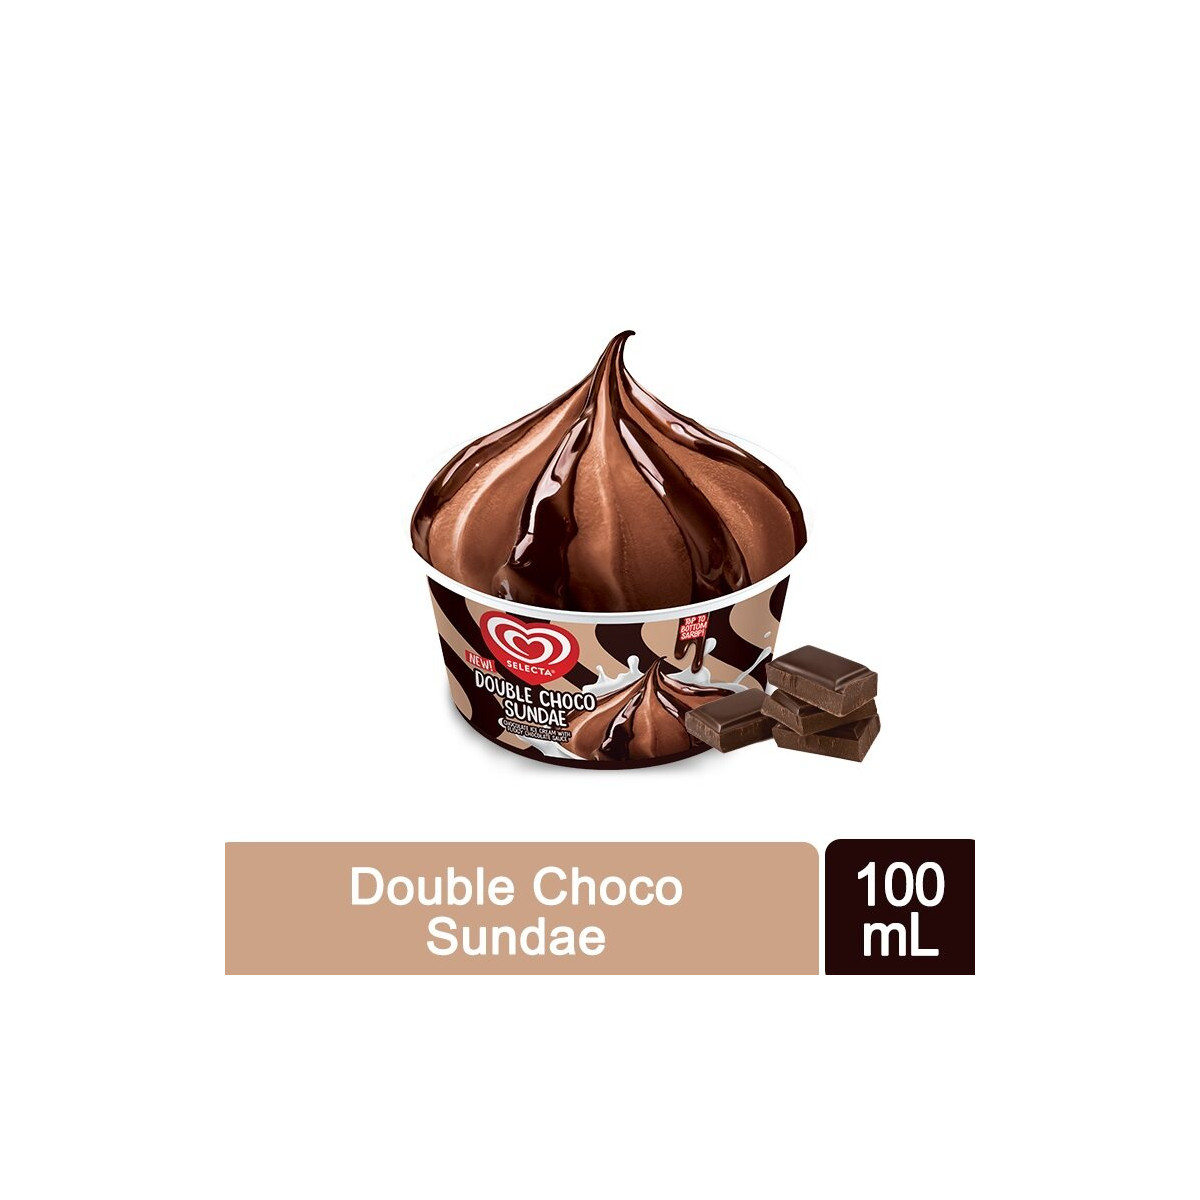 Selecta Sundae Cups Chocolate Ice Cream 100mL